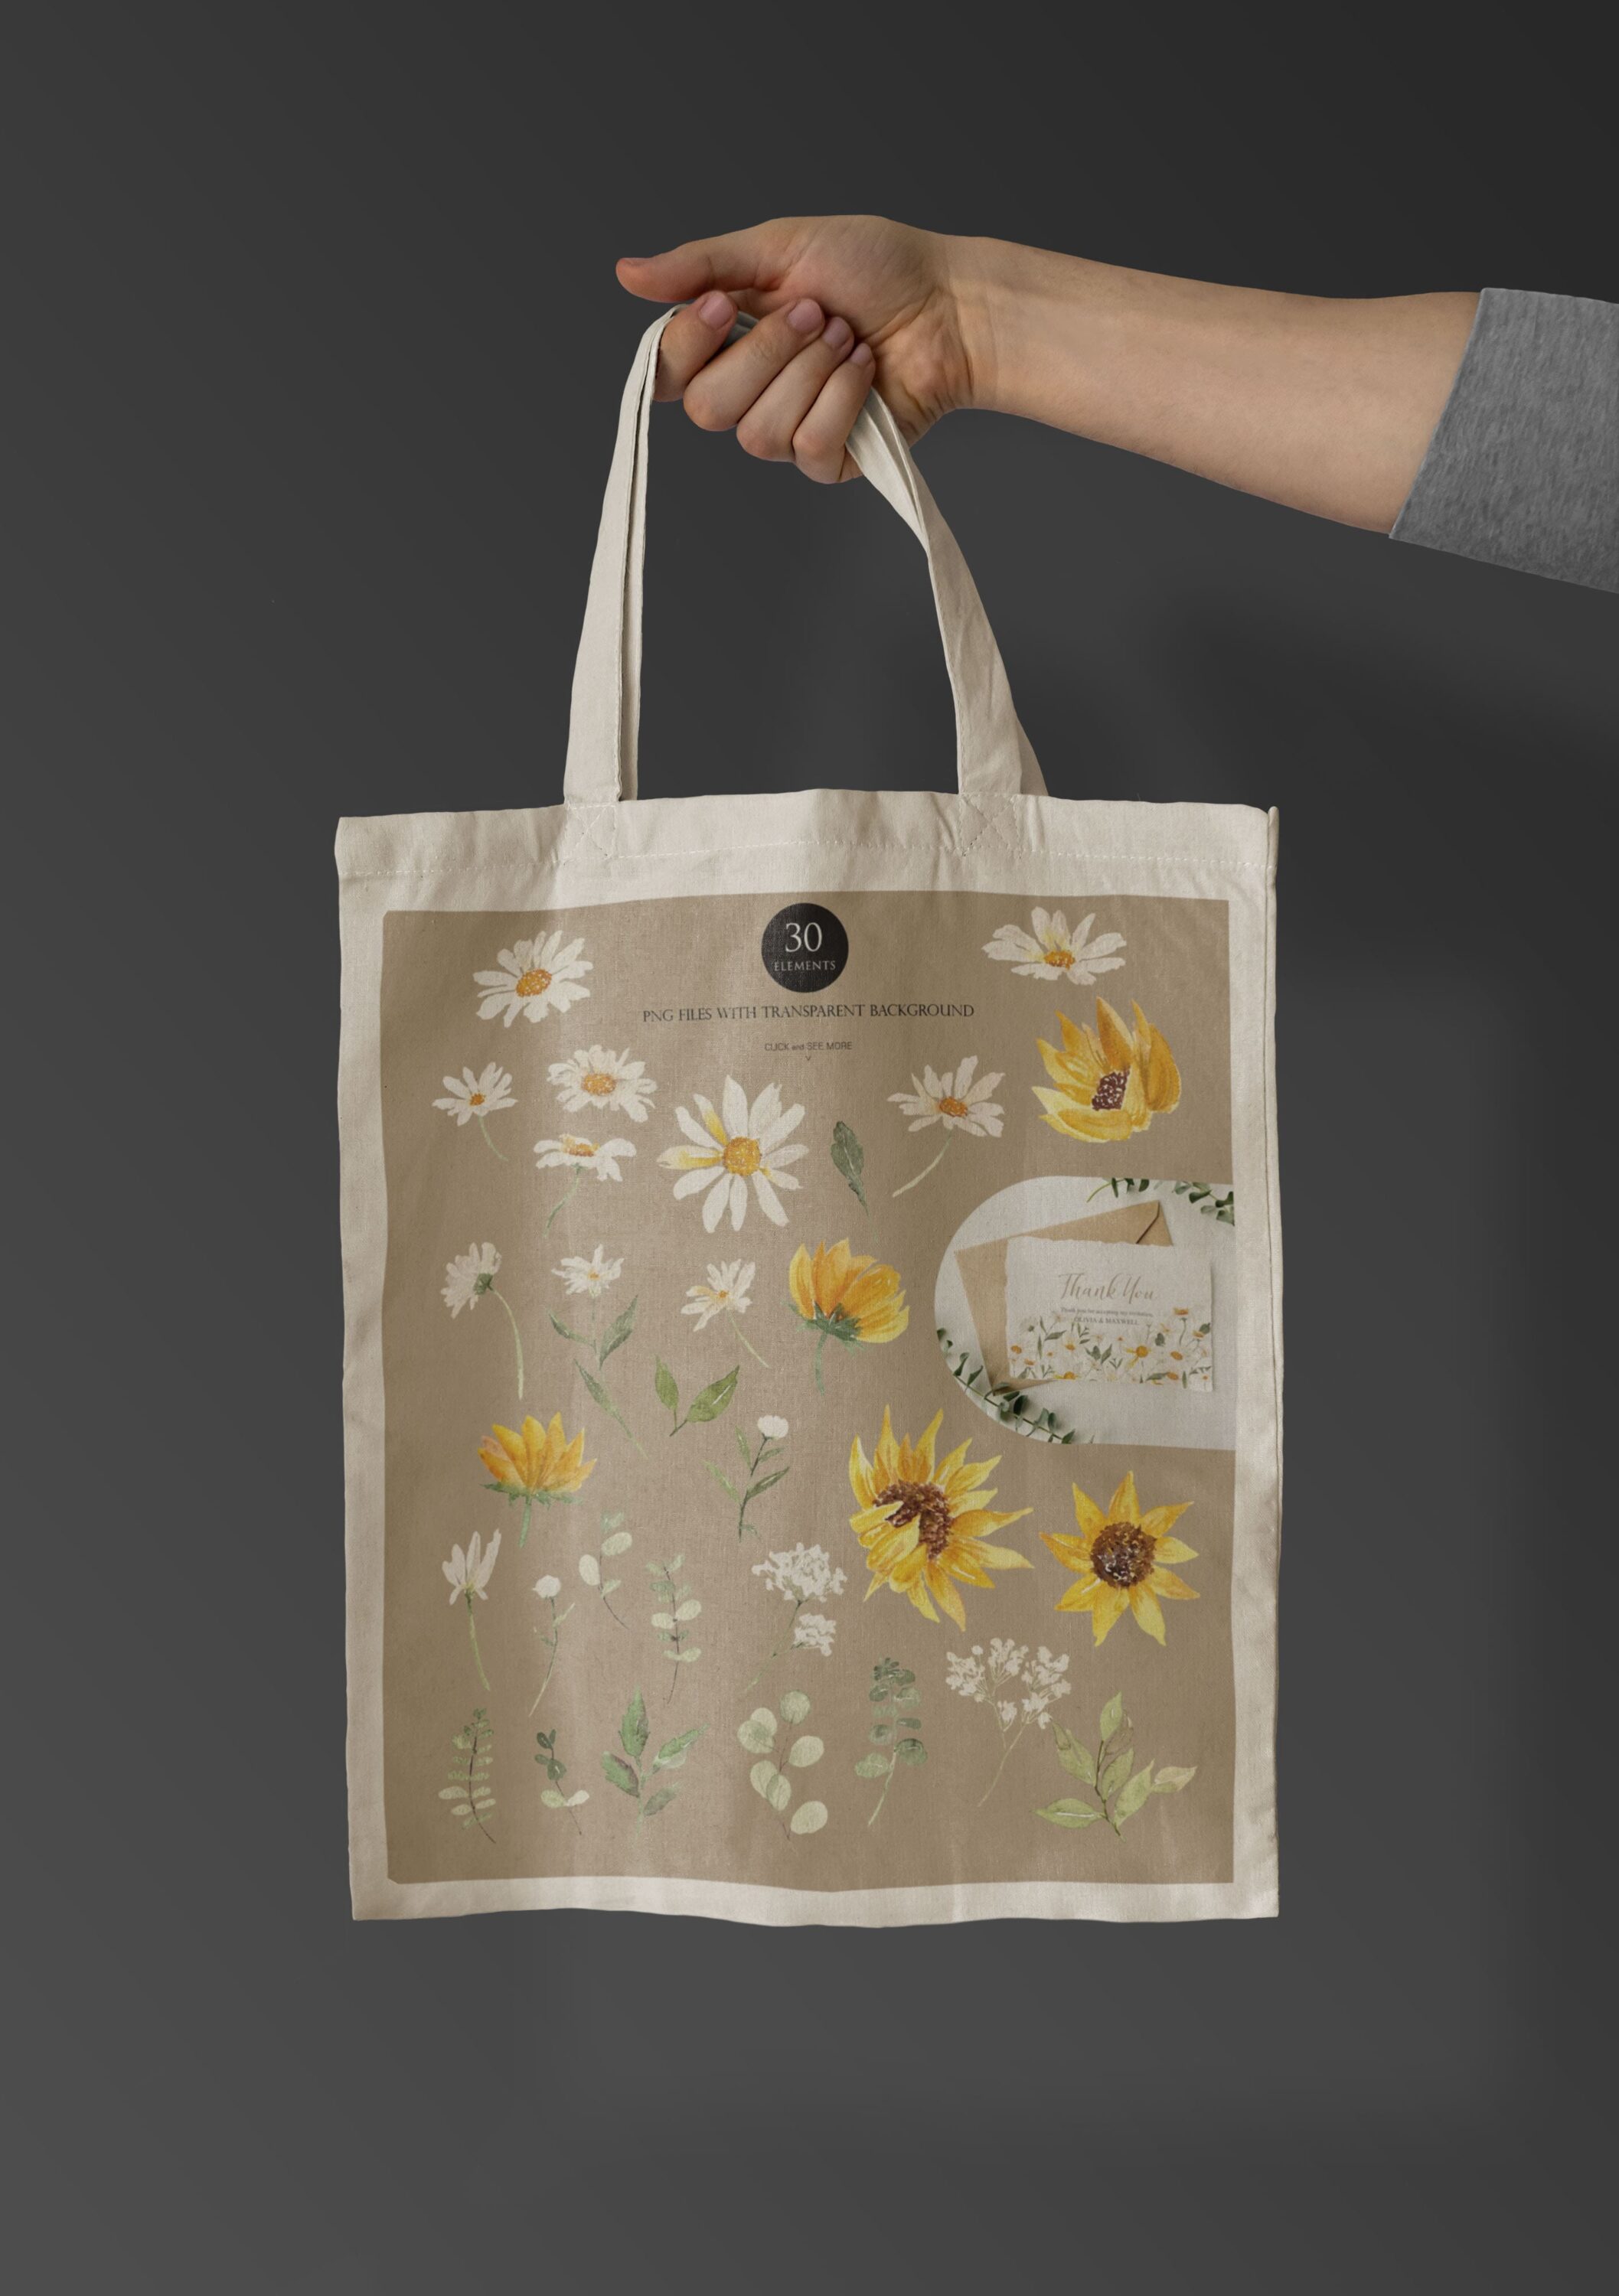 Flowers print on the bag.